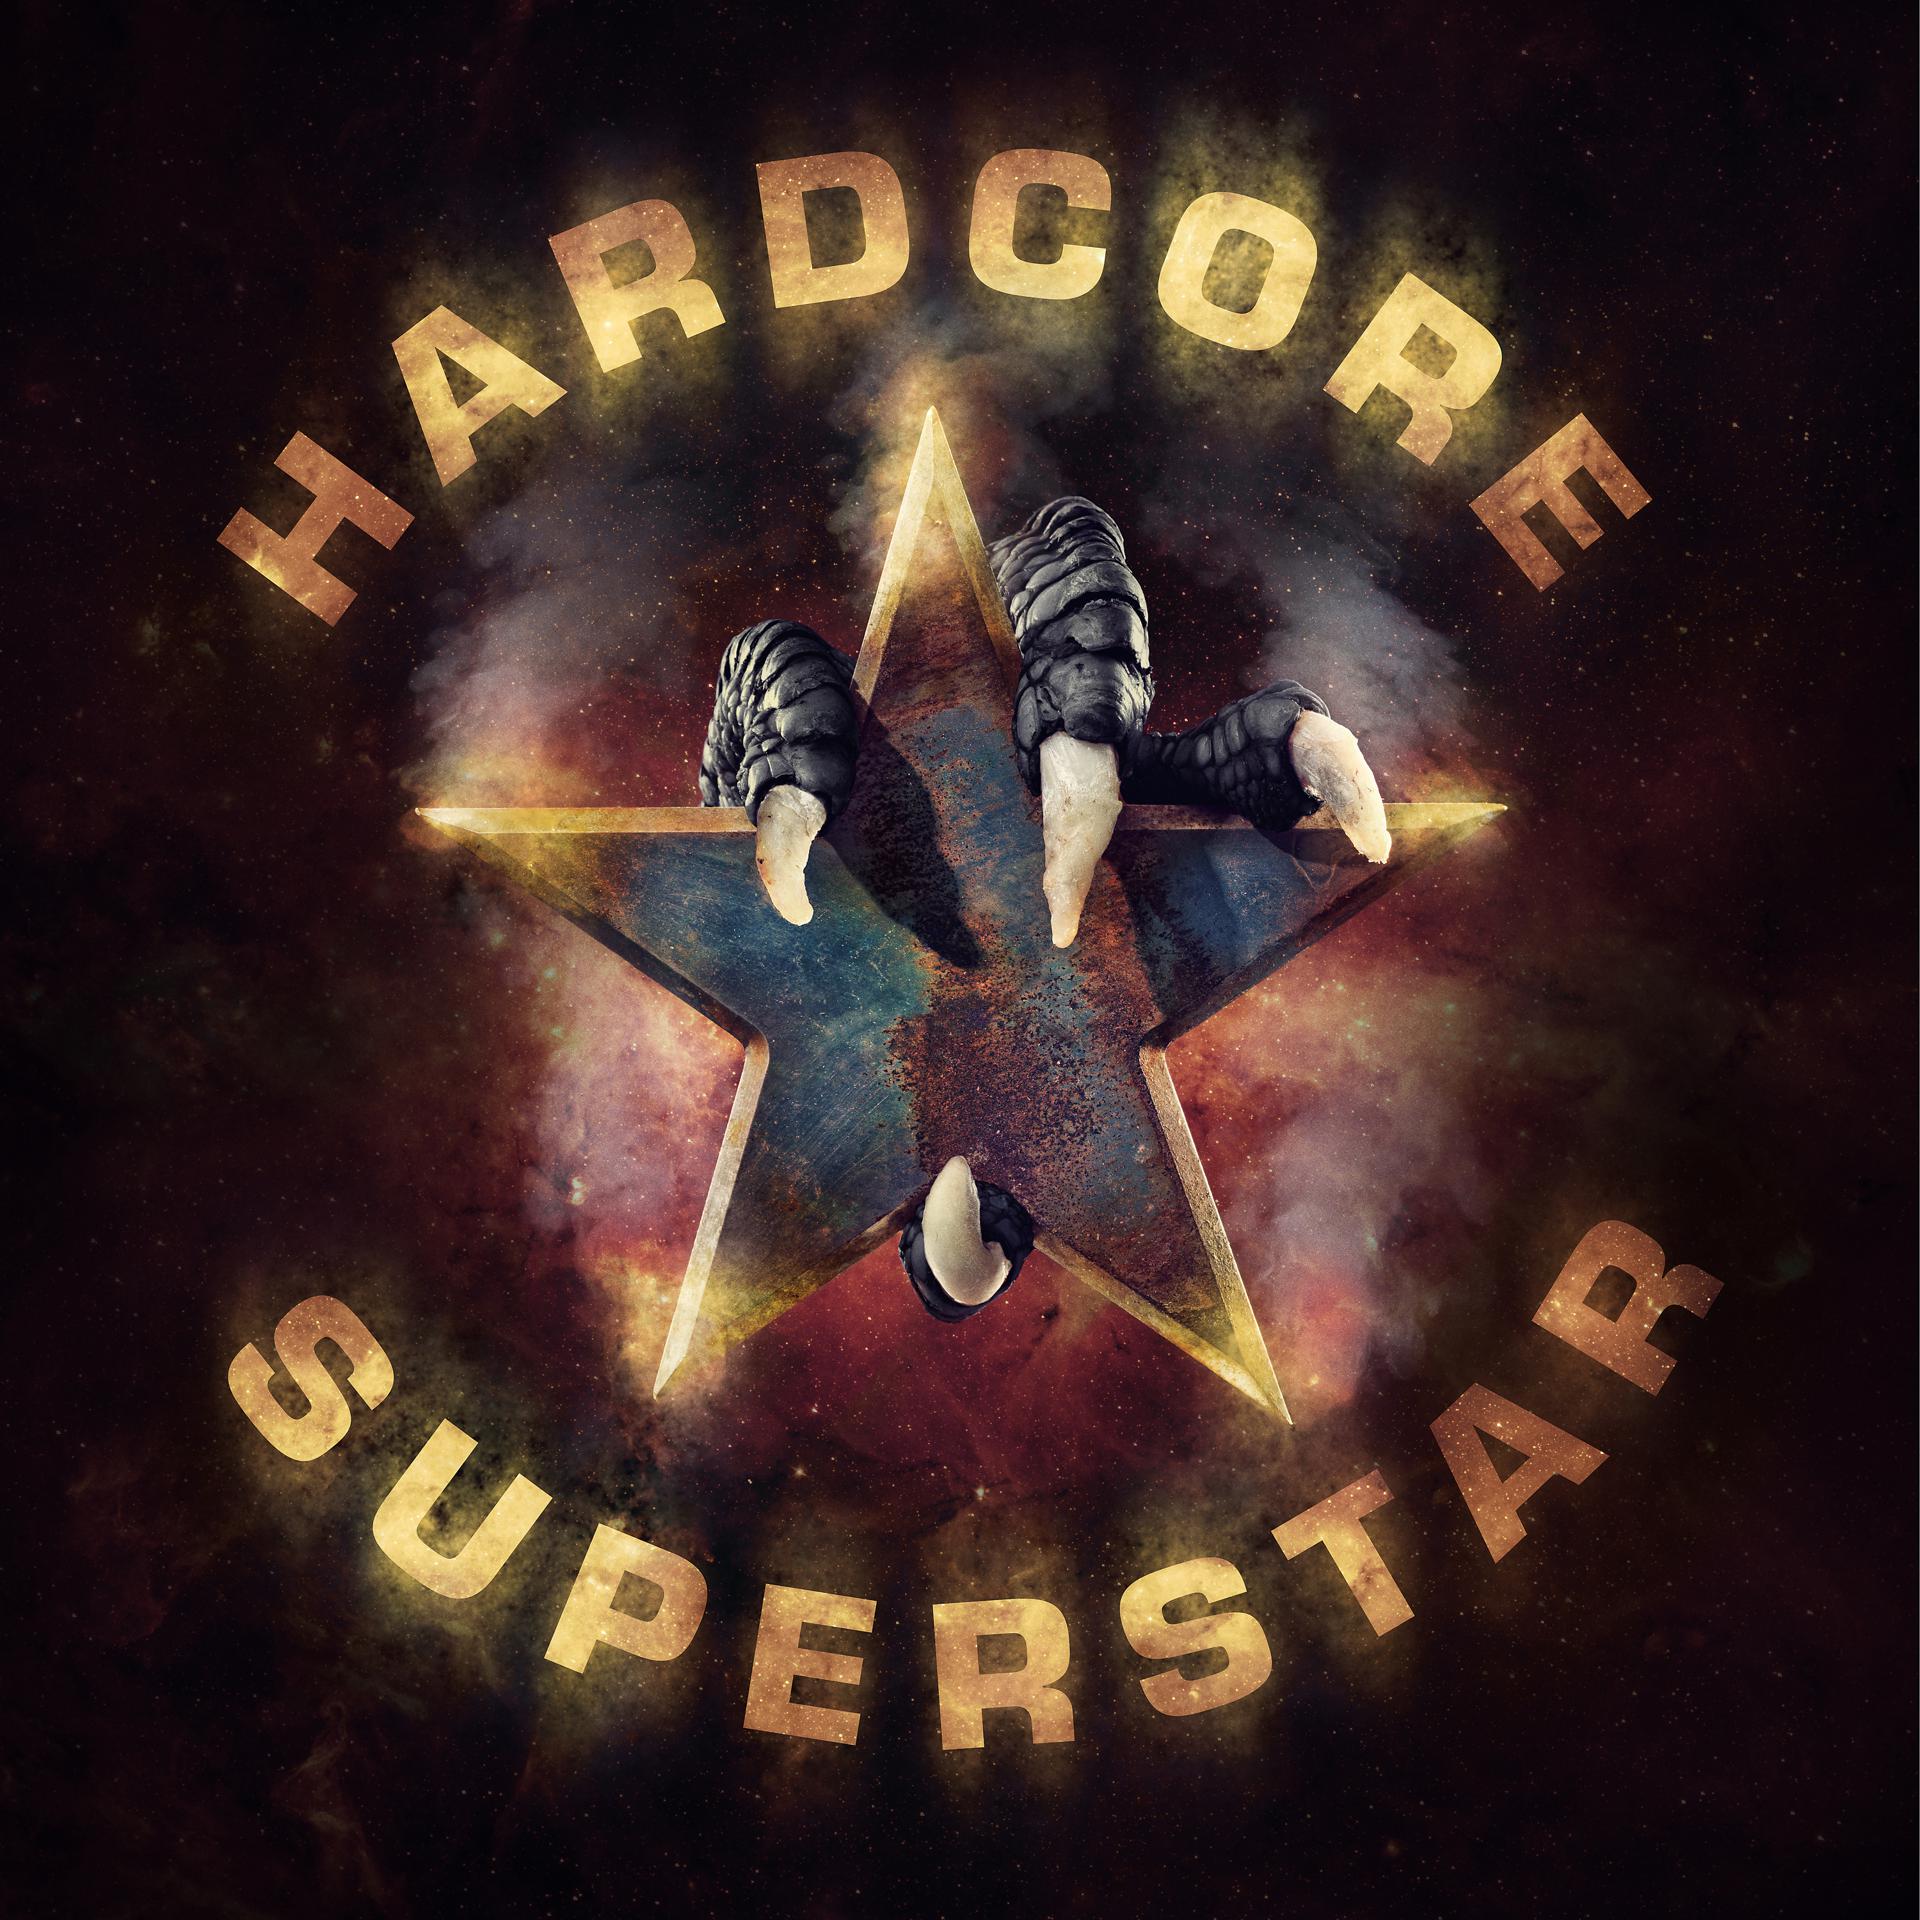 Хардкор суперстар. Hardcore Superstar (2022) - Abracadabra японская обложка диска. Хардкор Superstar обложки. Hardcore Superstar обложка альбома. Супер хардкор